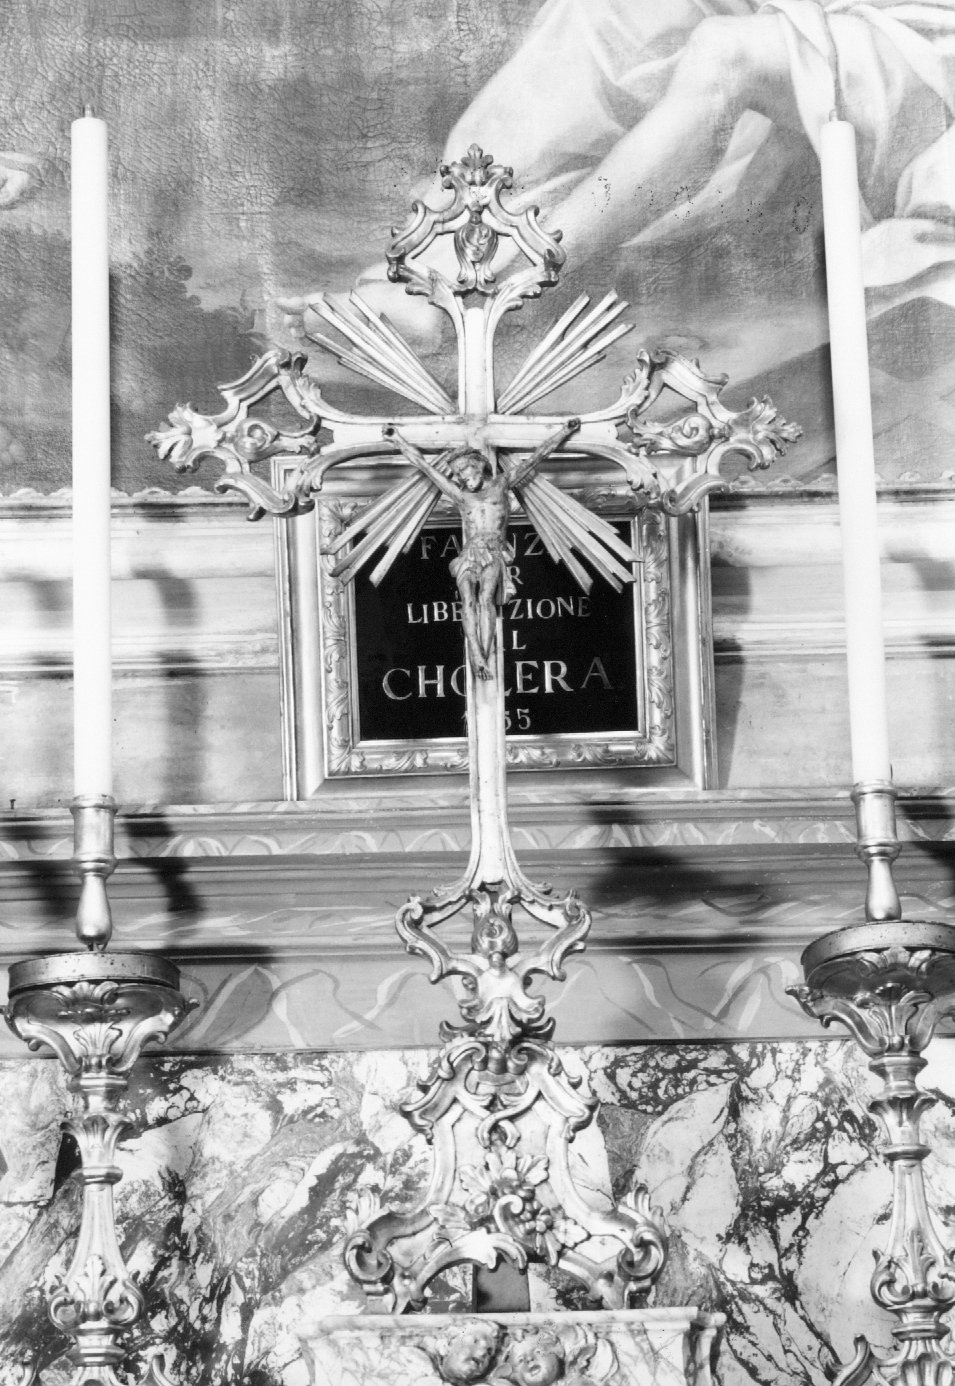 croce d'altare - manifattura romagnola (sec. XVIII)